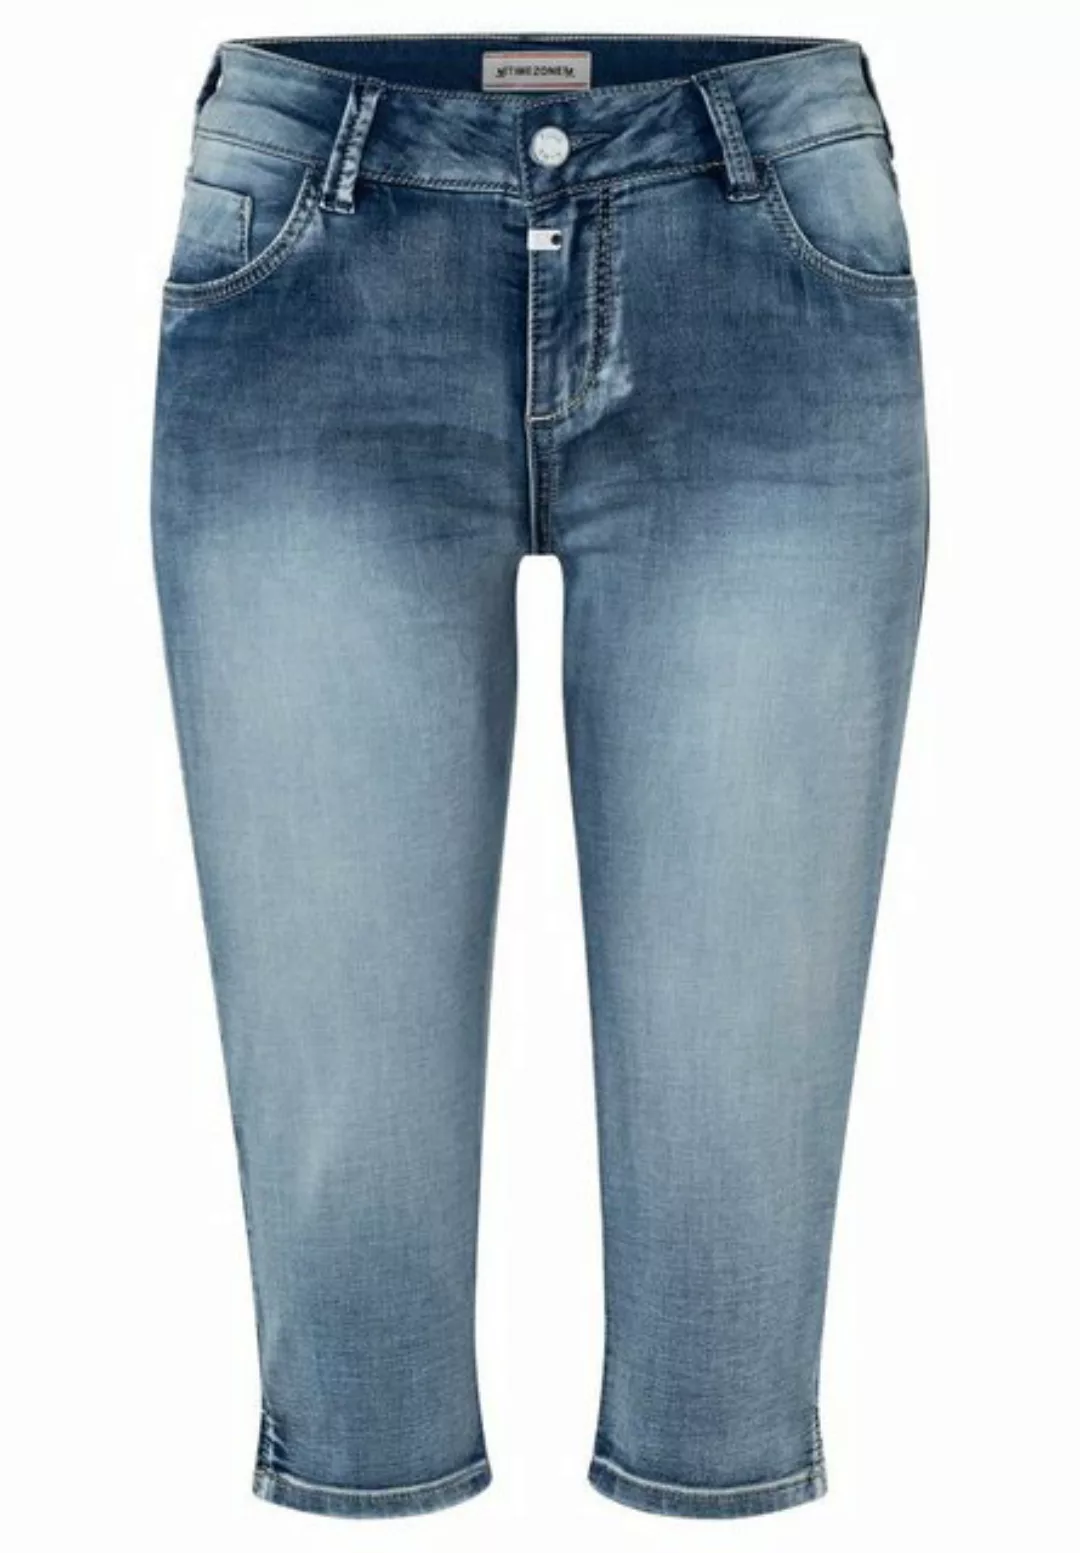 Timezone Damen Jeans Tight AleenaTZ 3/4 - Tight Fit - Blau - Aqua Blue Wash günstig online kaufen